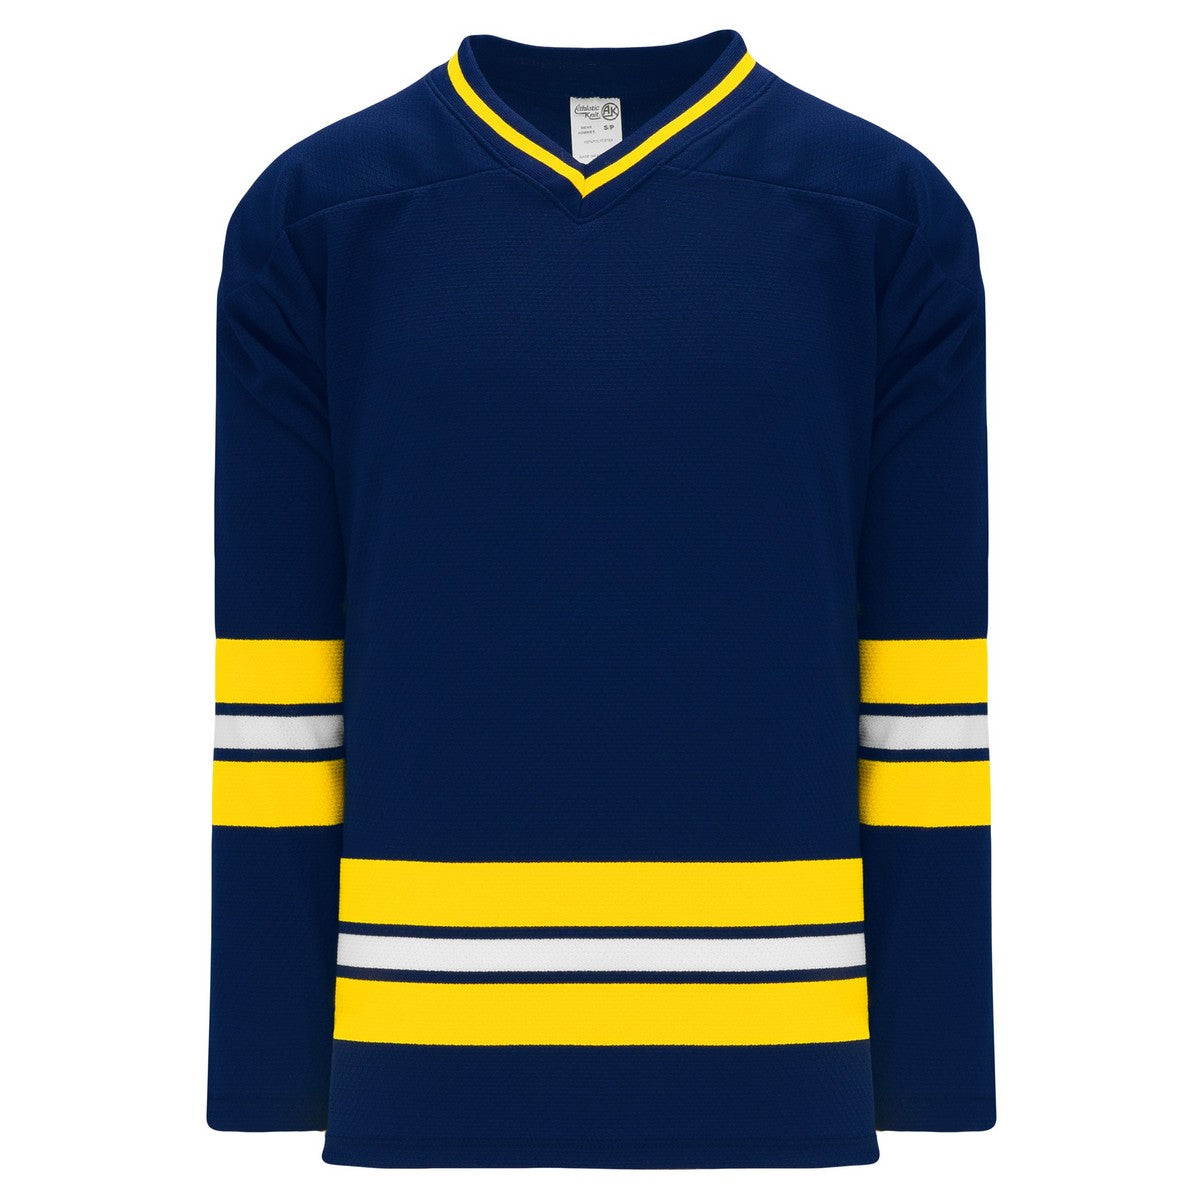 Replica Classic Style Michigan Navy Hockey Jersey